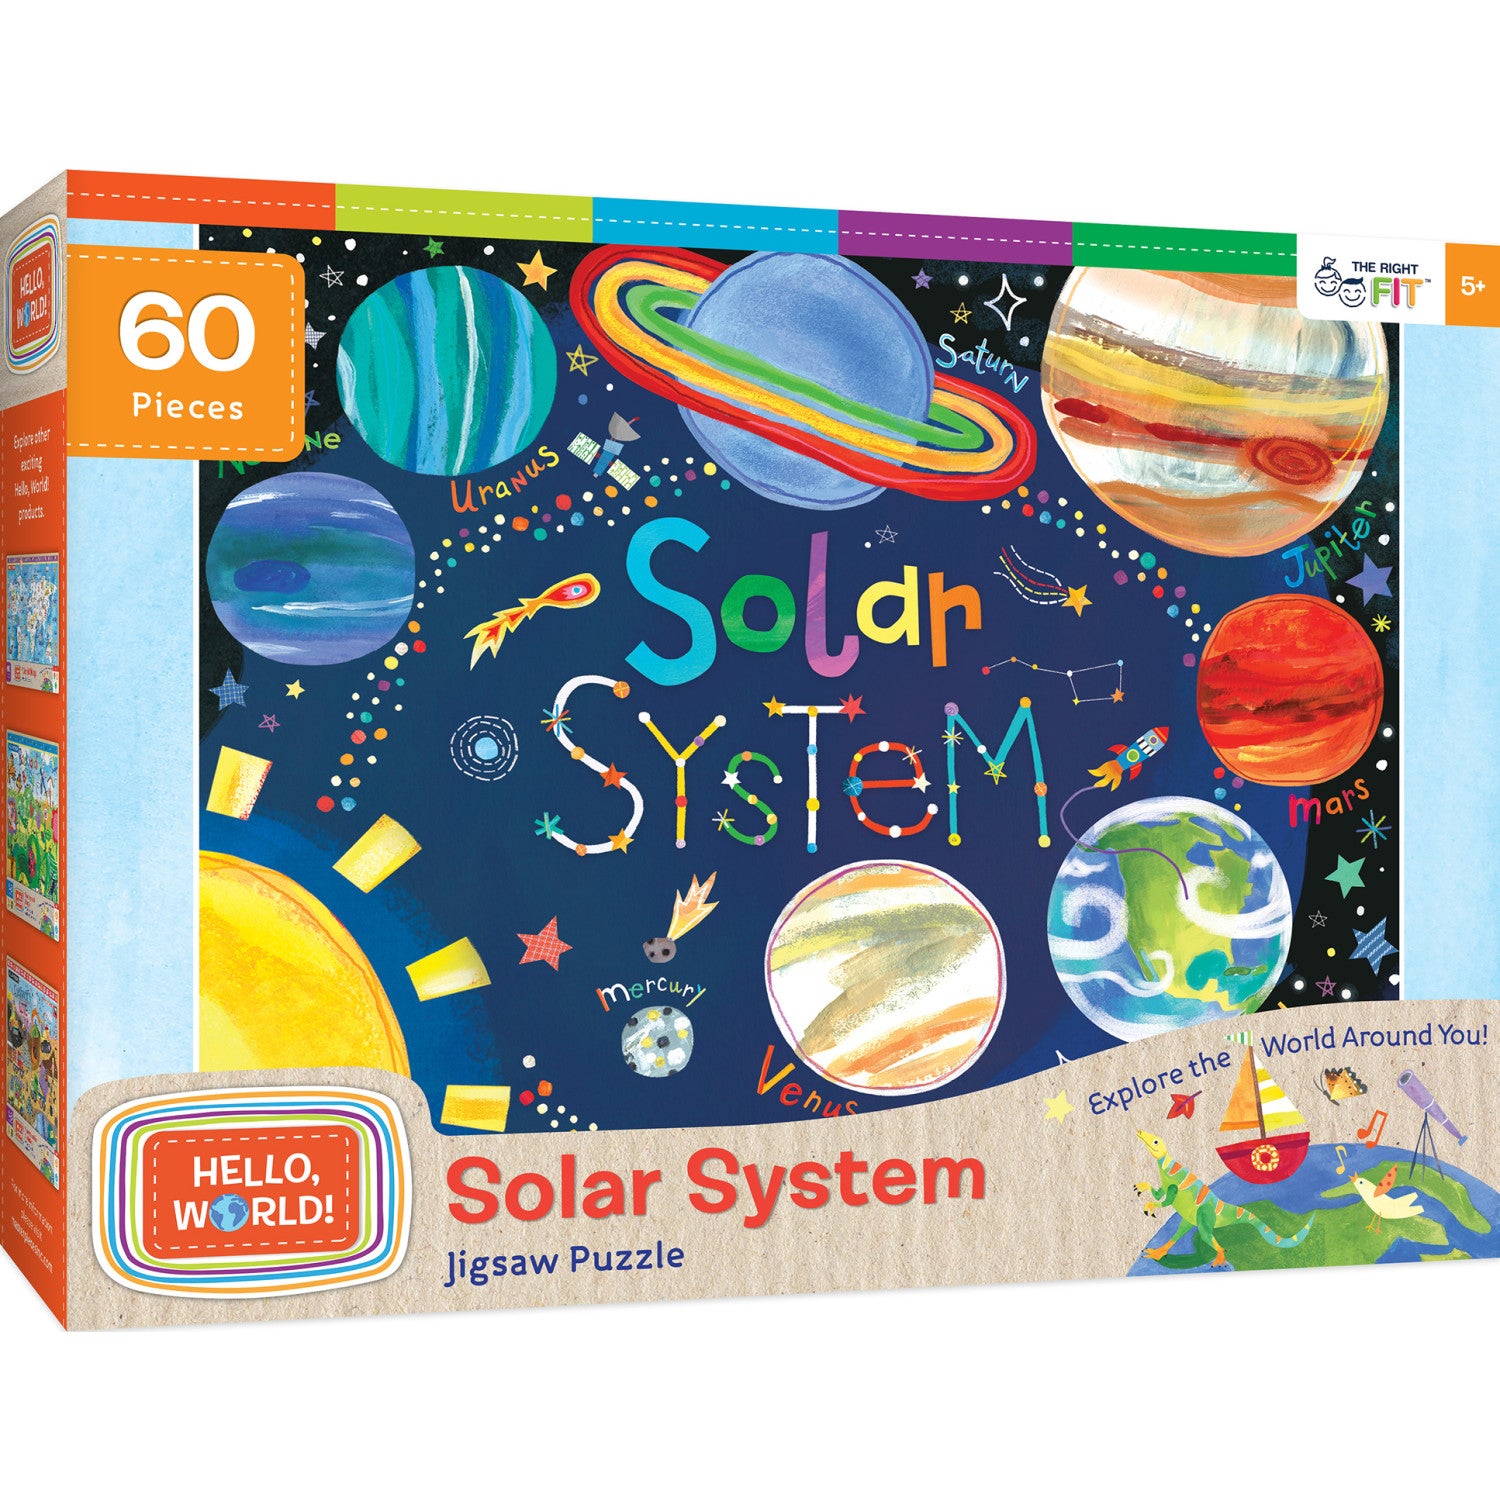 Hello, World! - Solar System 60 Piece Puzzle